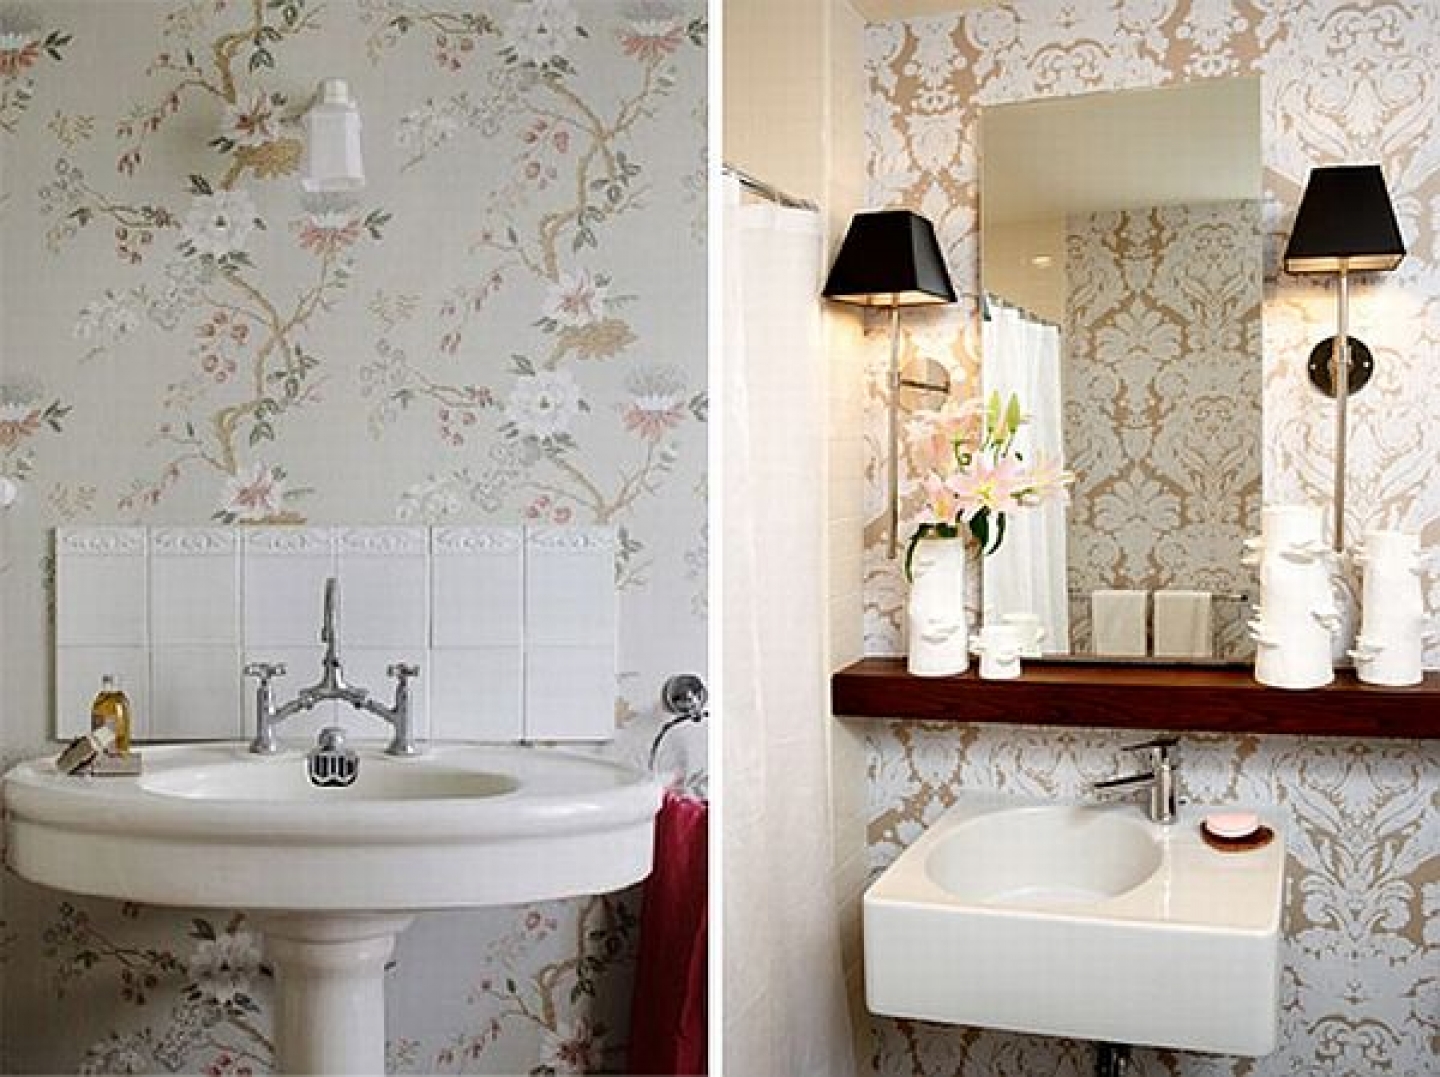 wallpaper-designs-for-bedrooms-minimalist-ideas-on-bathroom-design-ideas